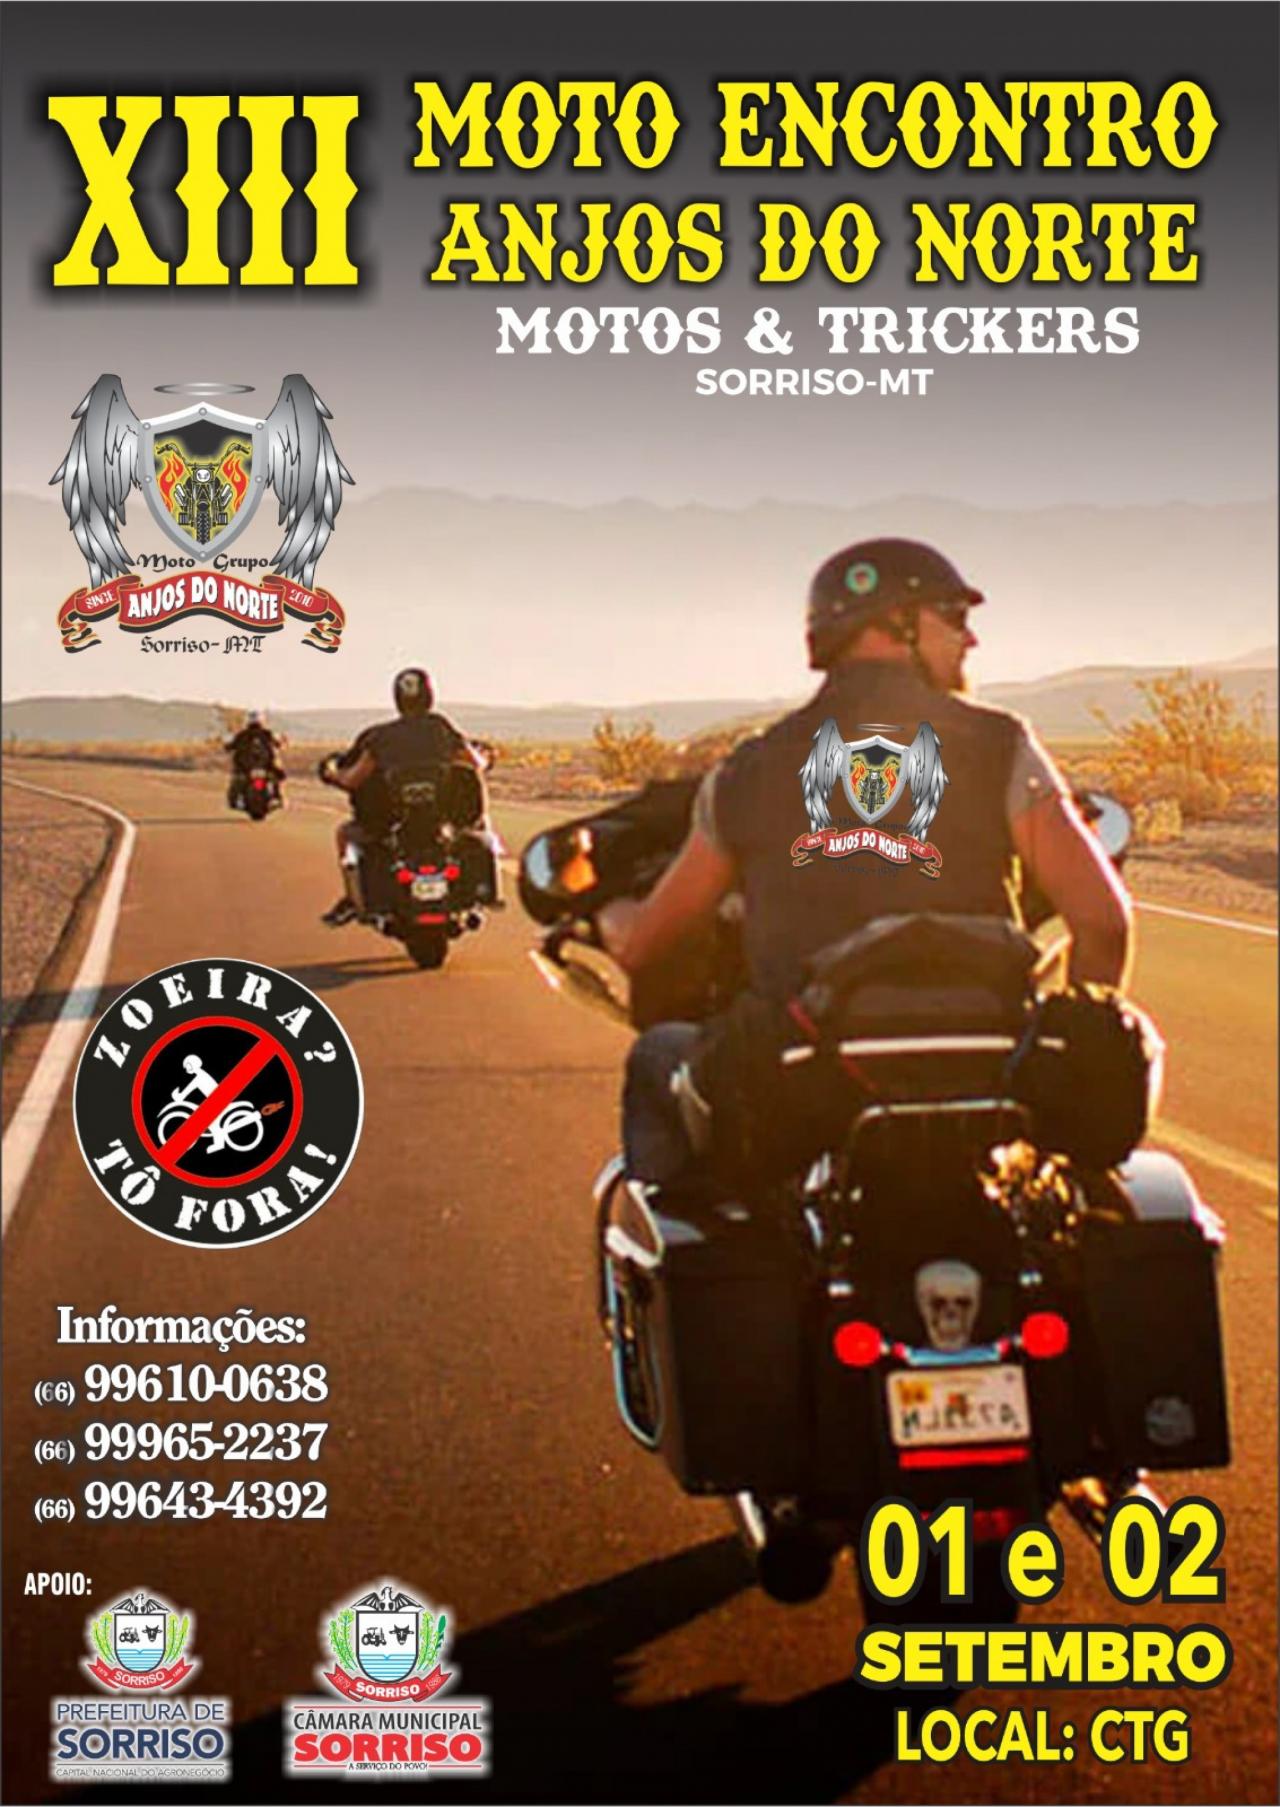 Sorriso promove o XIII Moto Encontro Anjos do Norte